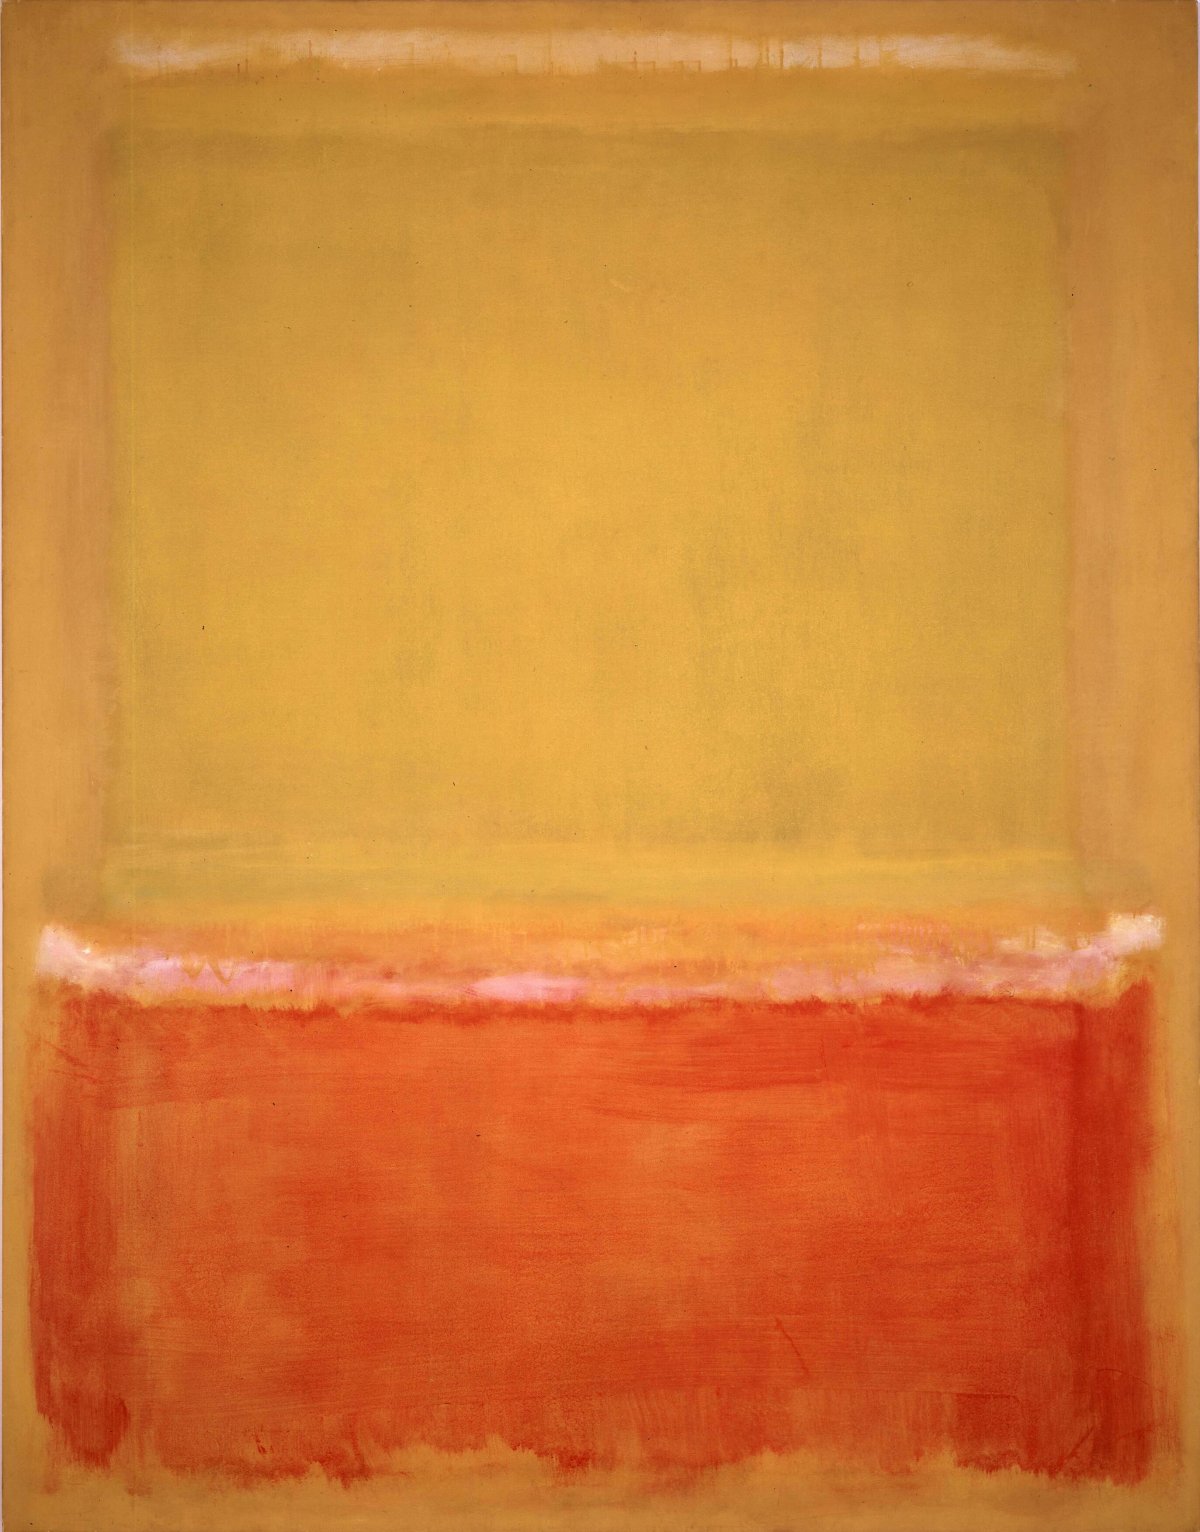 Mark Rothko, Untitled (White, Yellow, Red on Yellow), 1953